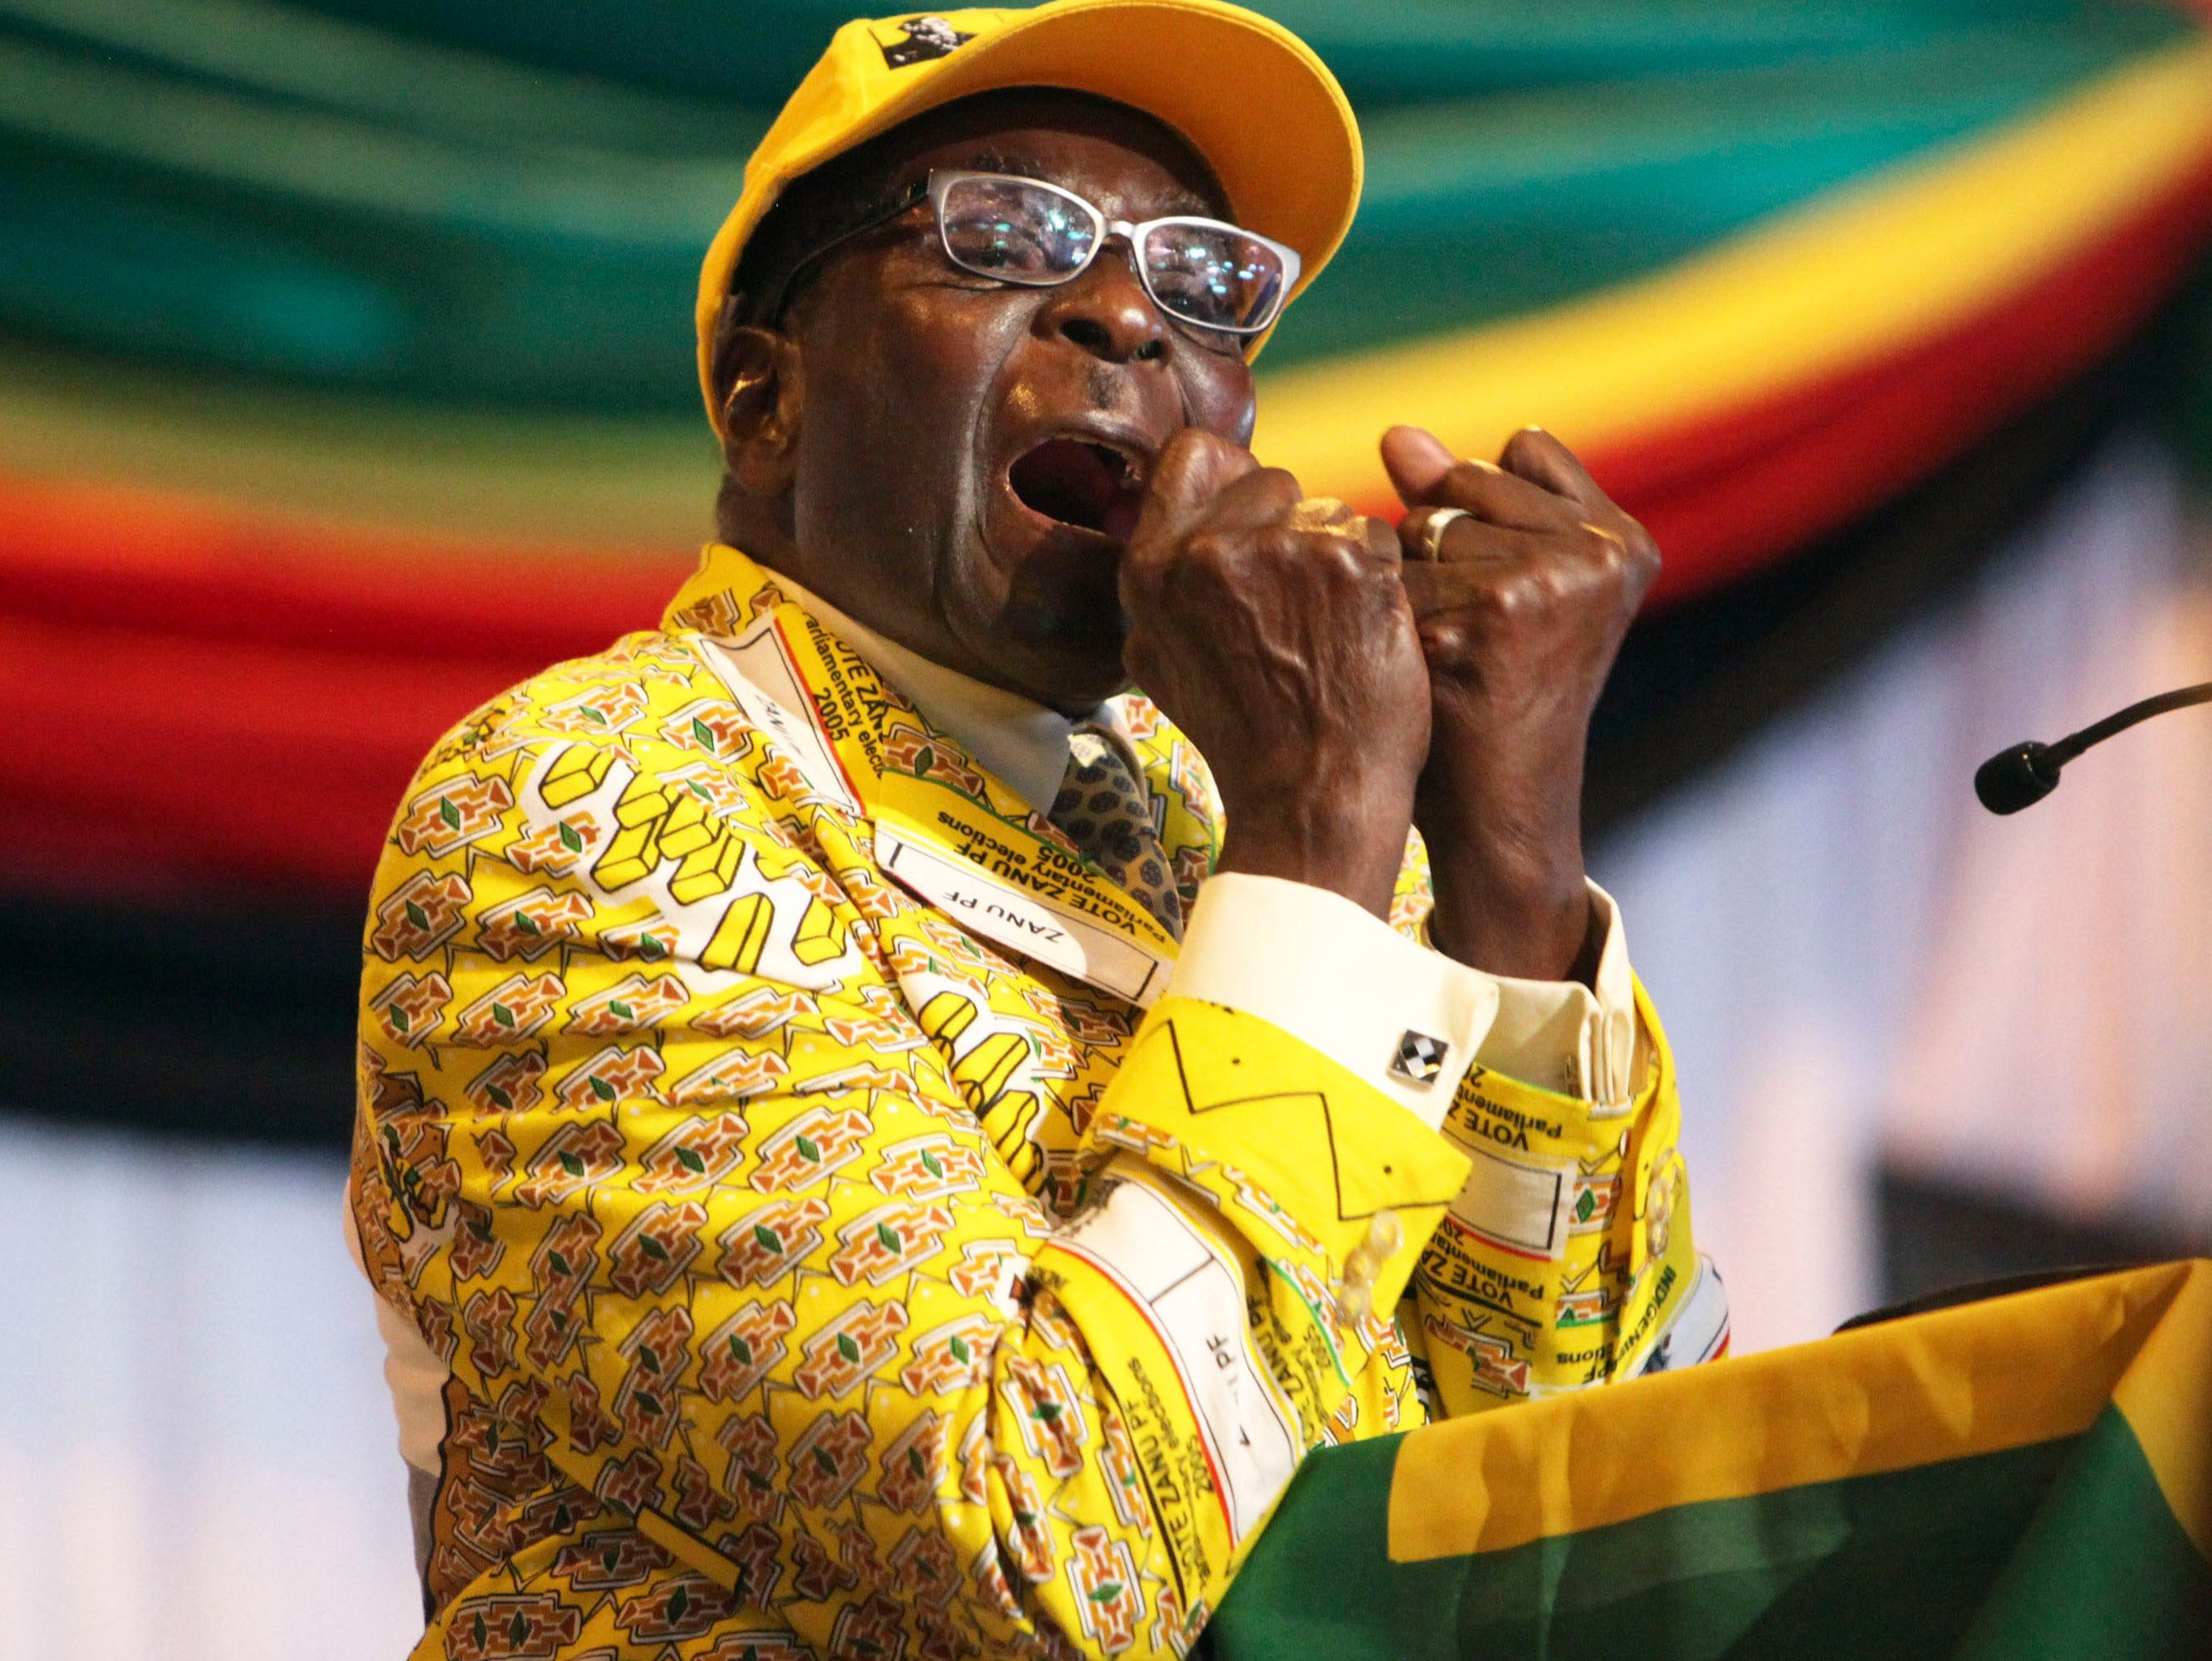 British American Tobacco has been accused of negotiating a bribe for former Zimbabwean leader Robert Mugabe